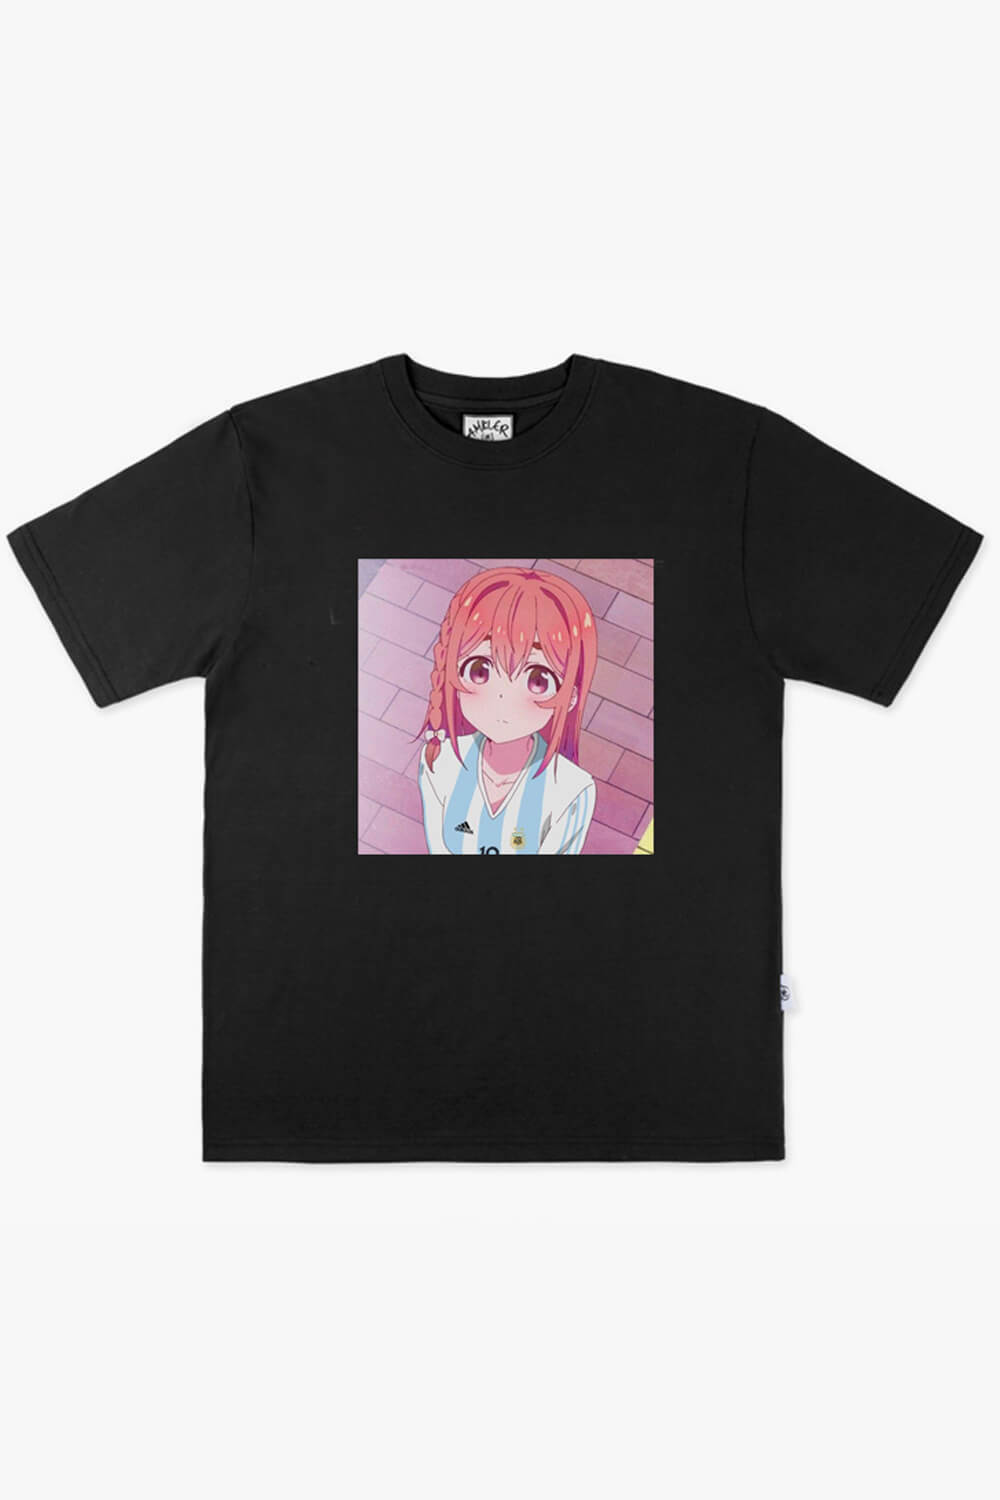 Animecore T-Shirt Cute Sumi Sakurasawa Tee